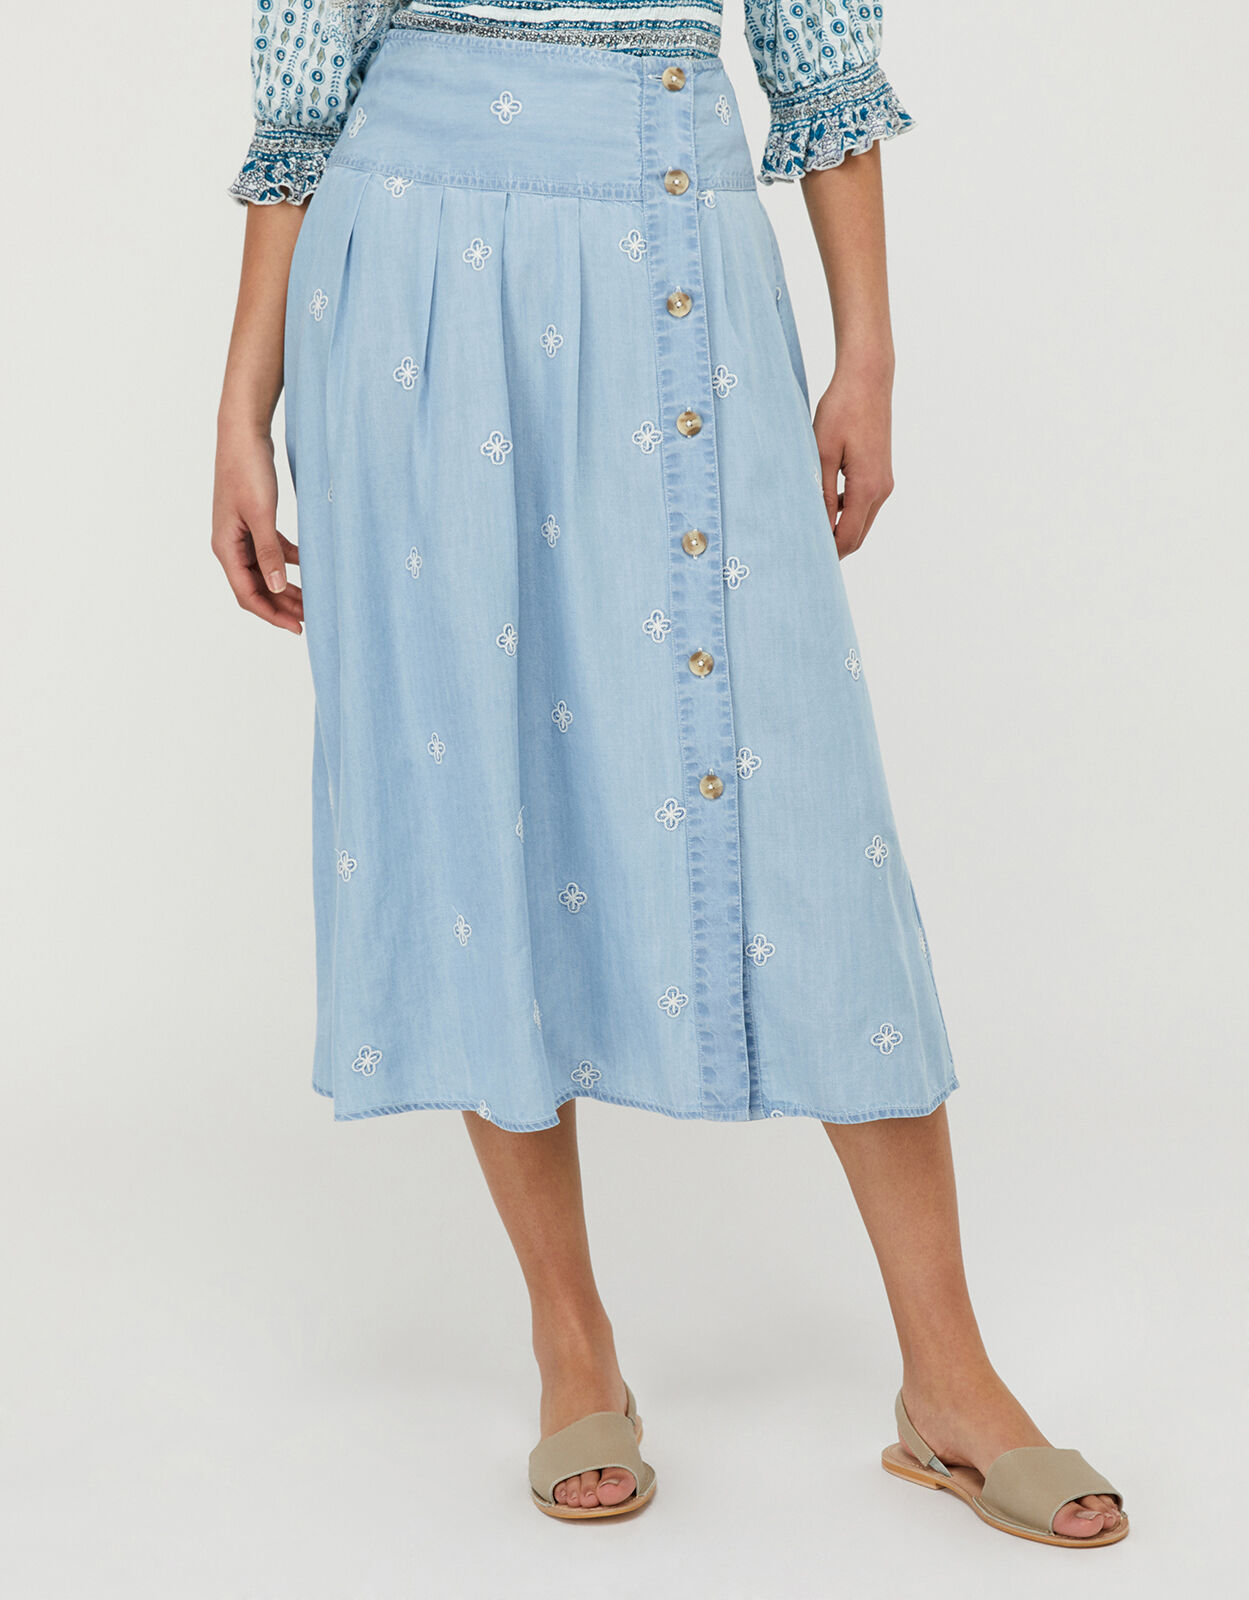 Elsie Floral Embroidered Skirt in 